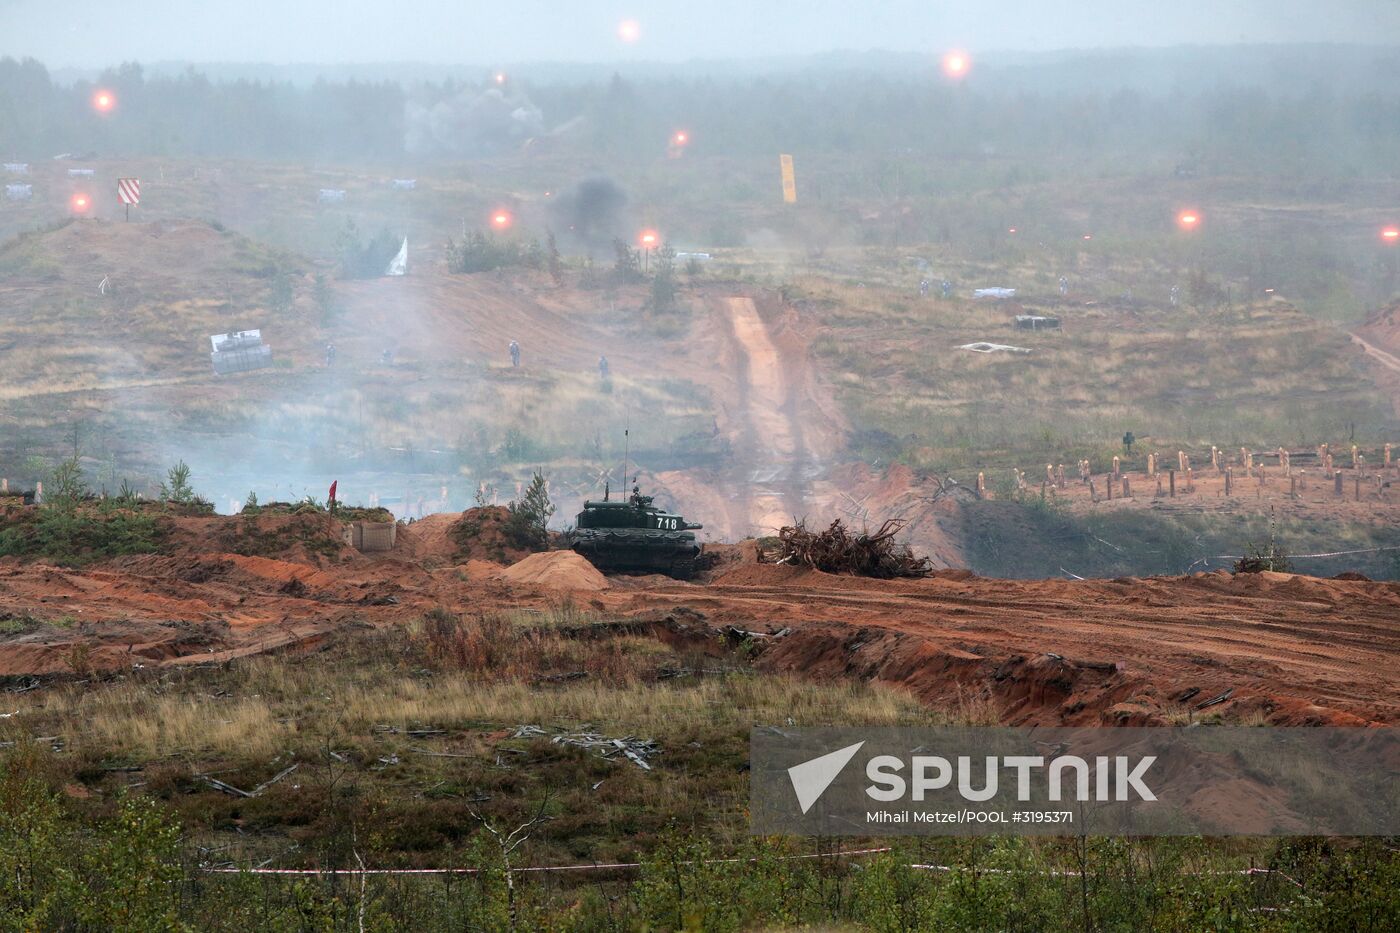 Zapad-2017 Russian-Belarusian exercises in Leningrad region